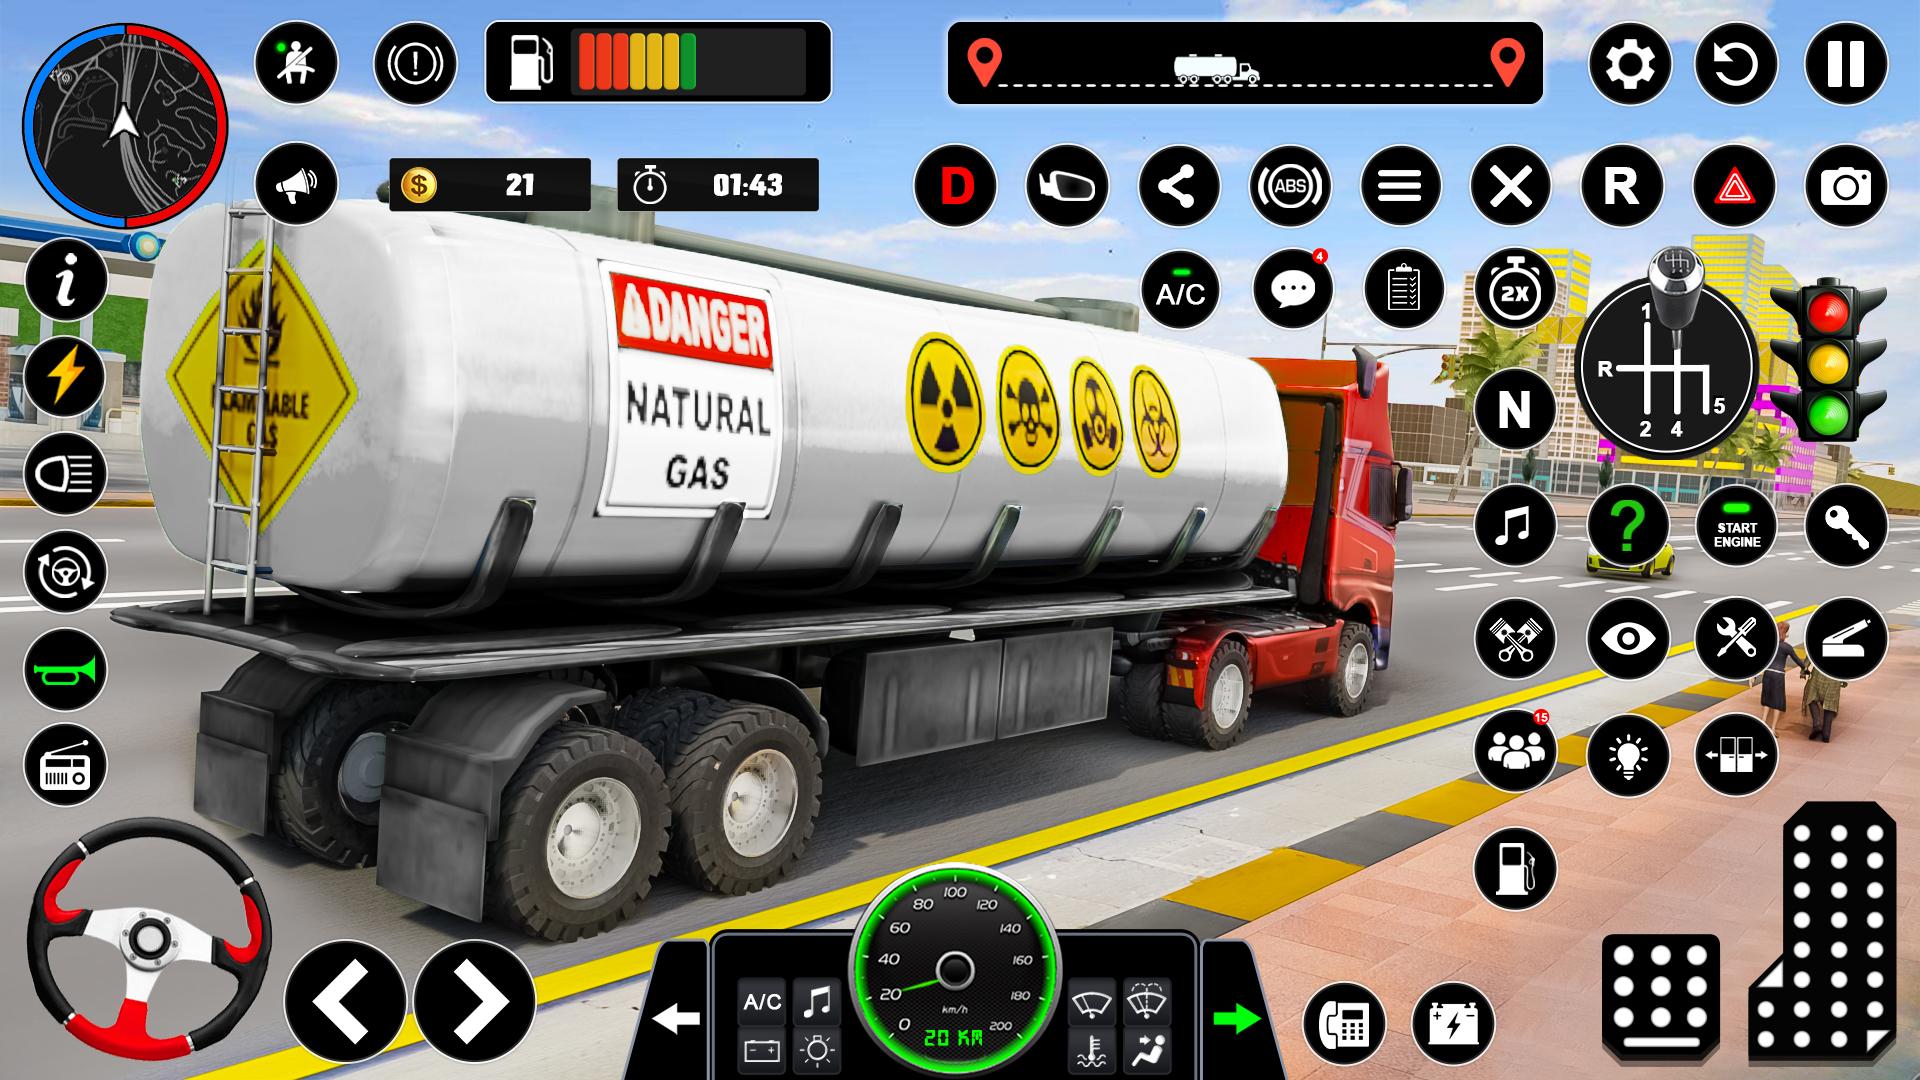 Oil Tanker Transport Game 3D para Android - Download